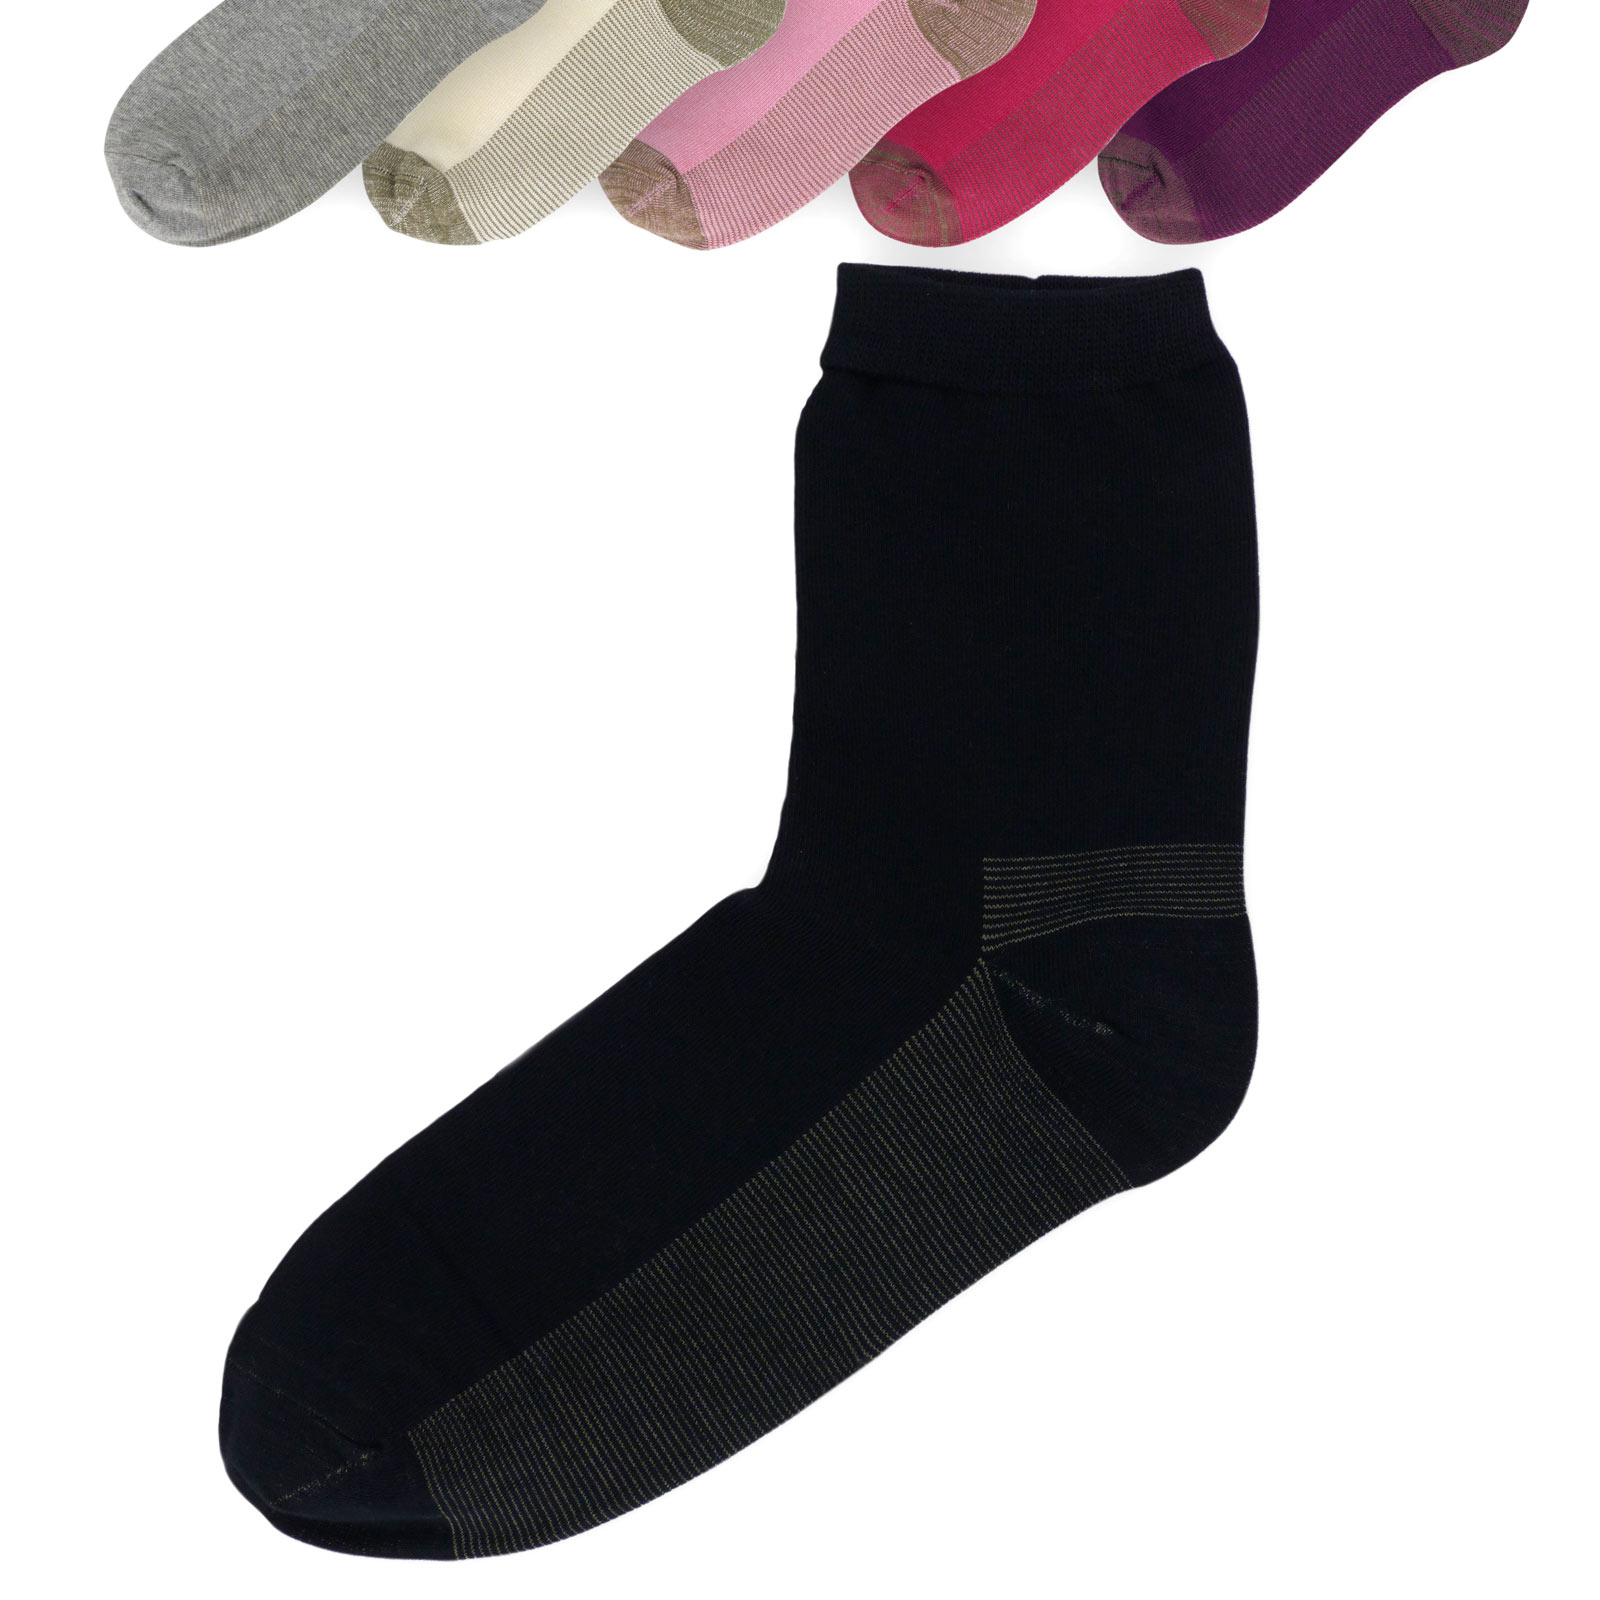 Ladies Mens Copper Infused Compression Ankle Socks Antibacterial | eBay